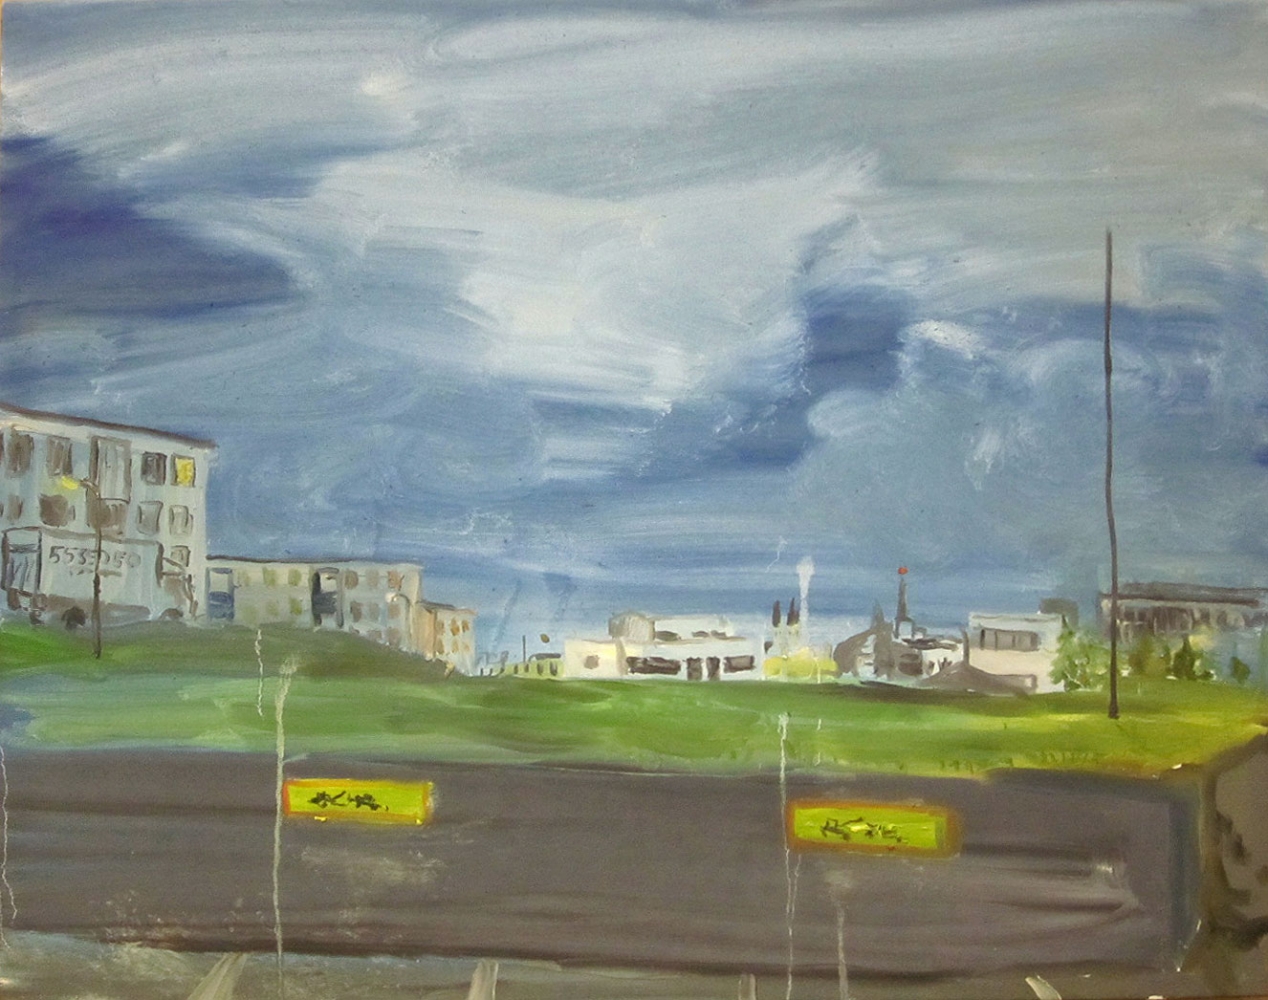 Ragnar Kjartansson
Night &amp;ndash; The Wind, 2011
Oil on canvas
27 1/2 x 35 3/8 inches
(69.85 x 89.85 cm)